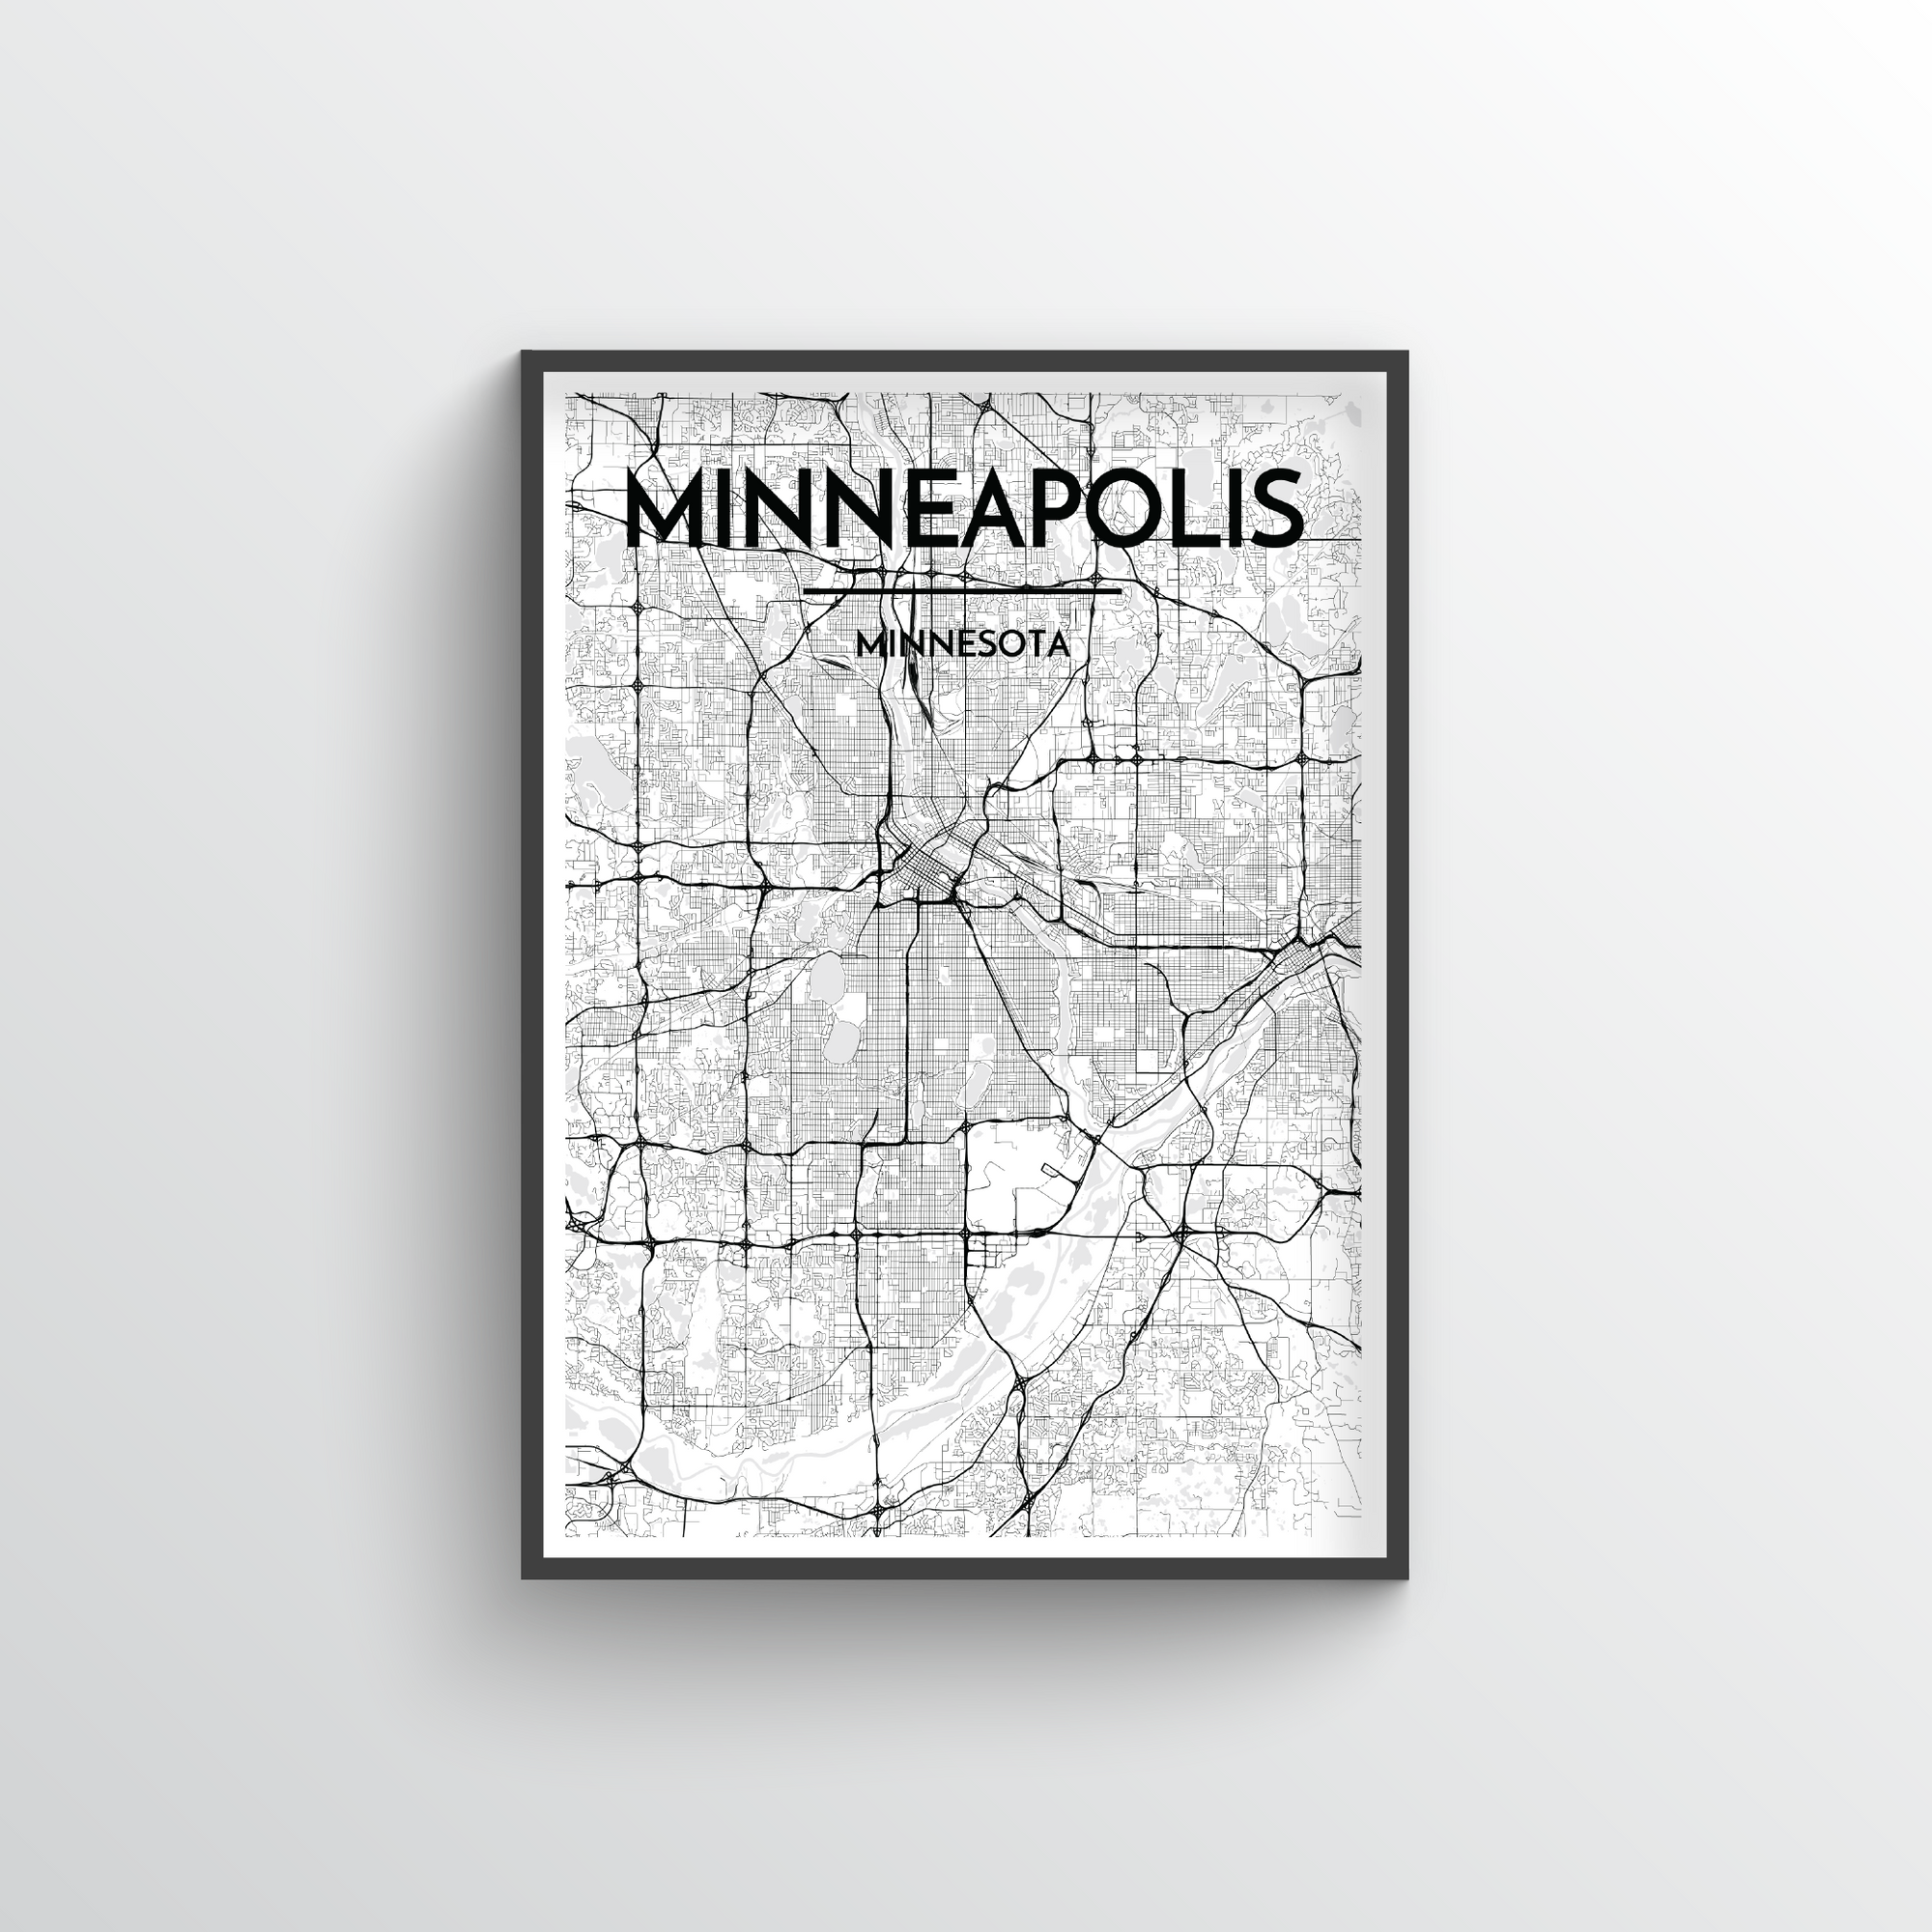 Map of Minneapolis, Minnesota - GIS Geography